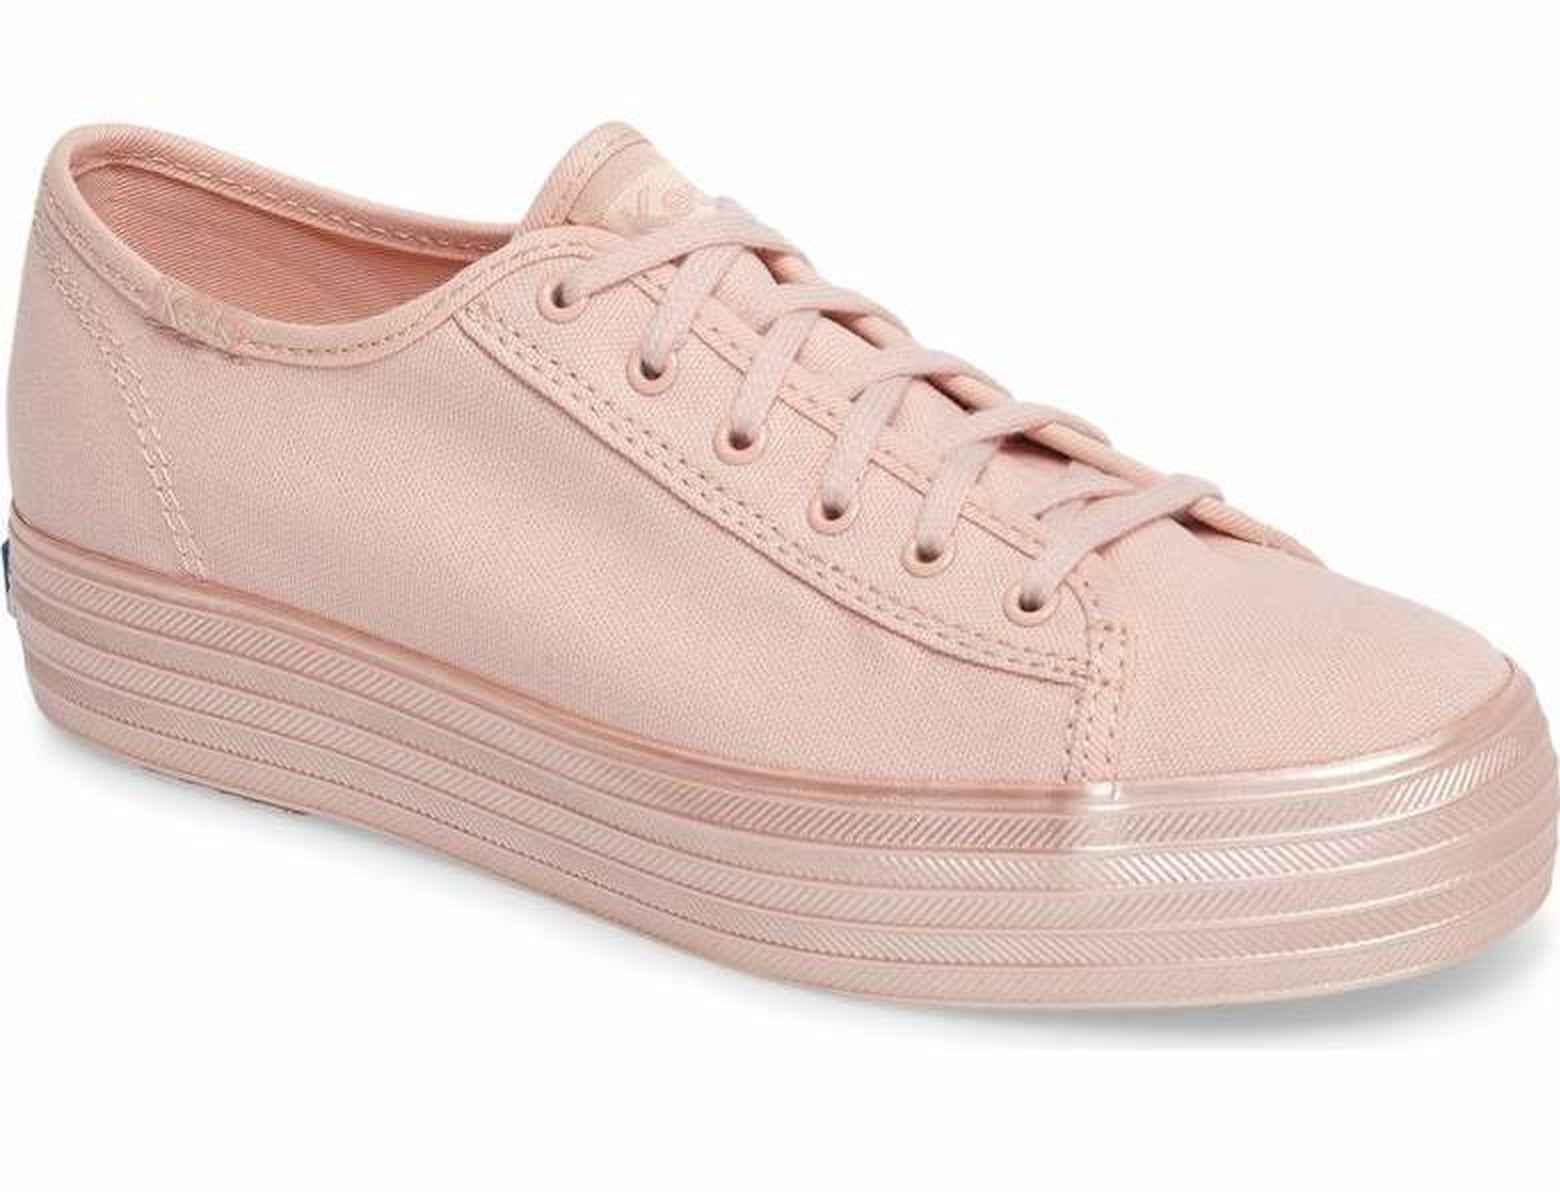 Pink Keds Sneakers 2018 | POPSUGAR Fashion